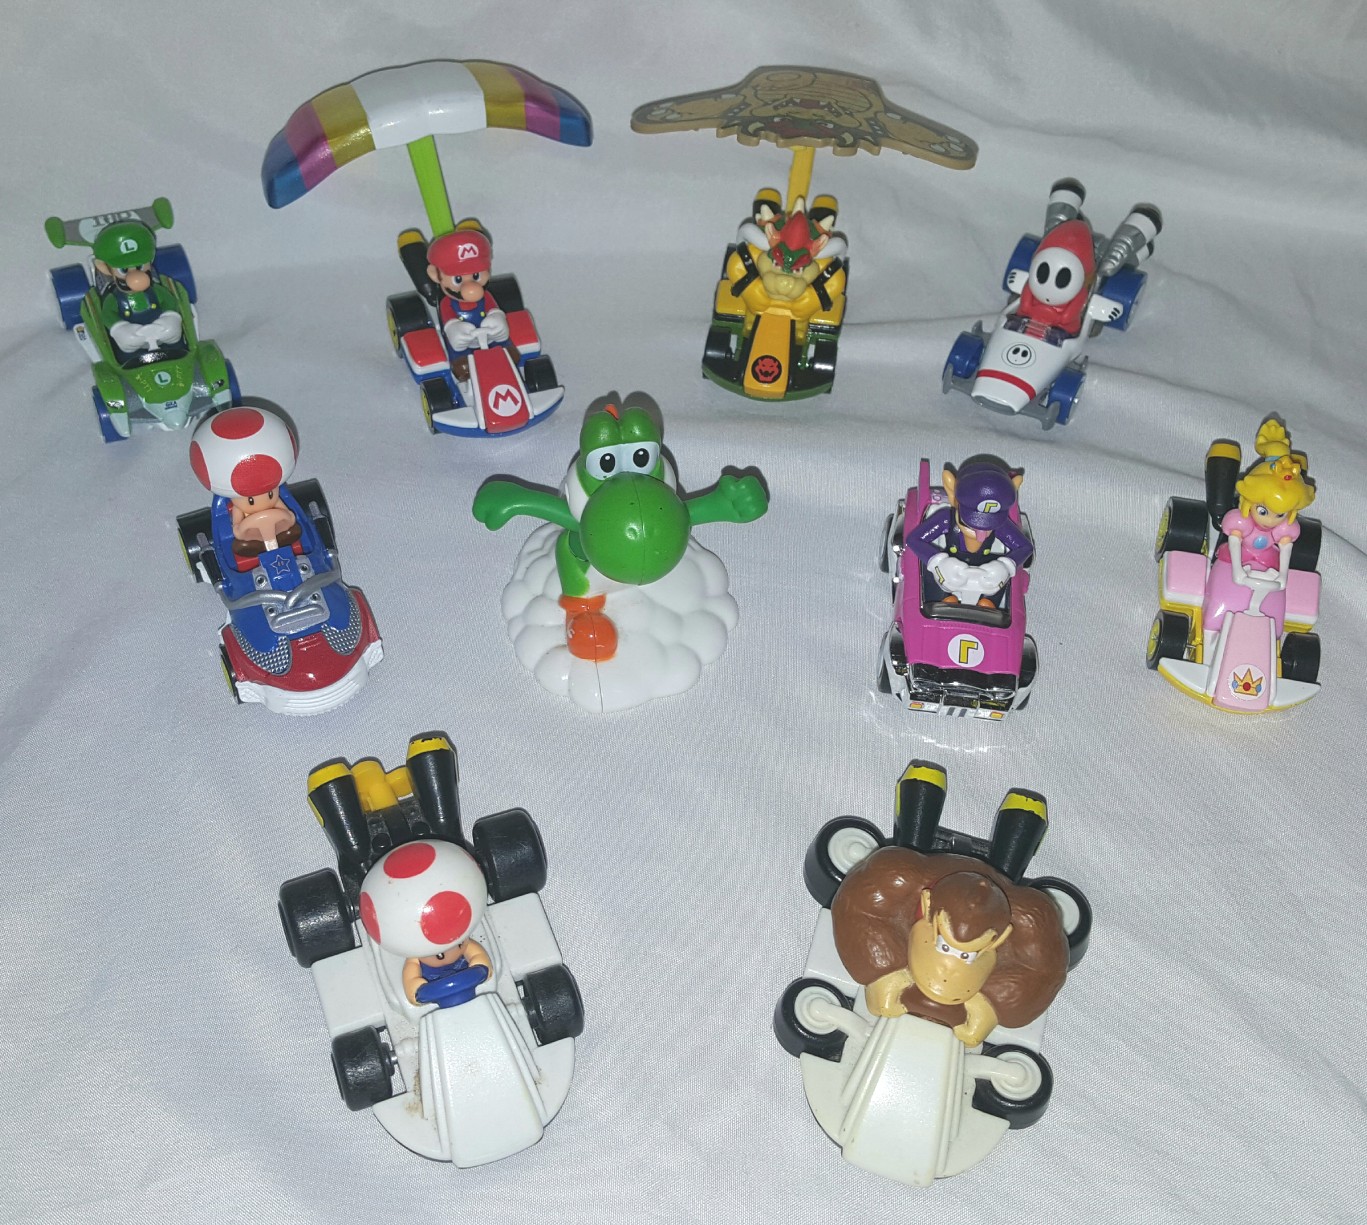 juguetes - Nintendo-Mario kart (Hot wheels)